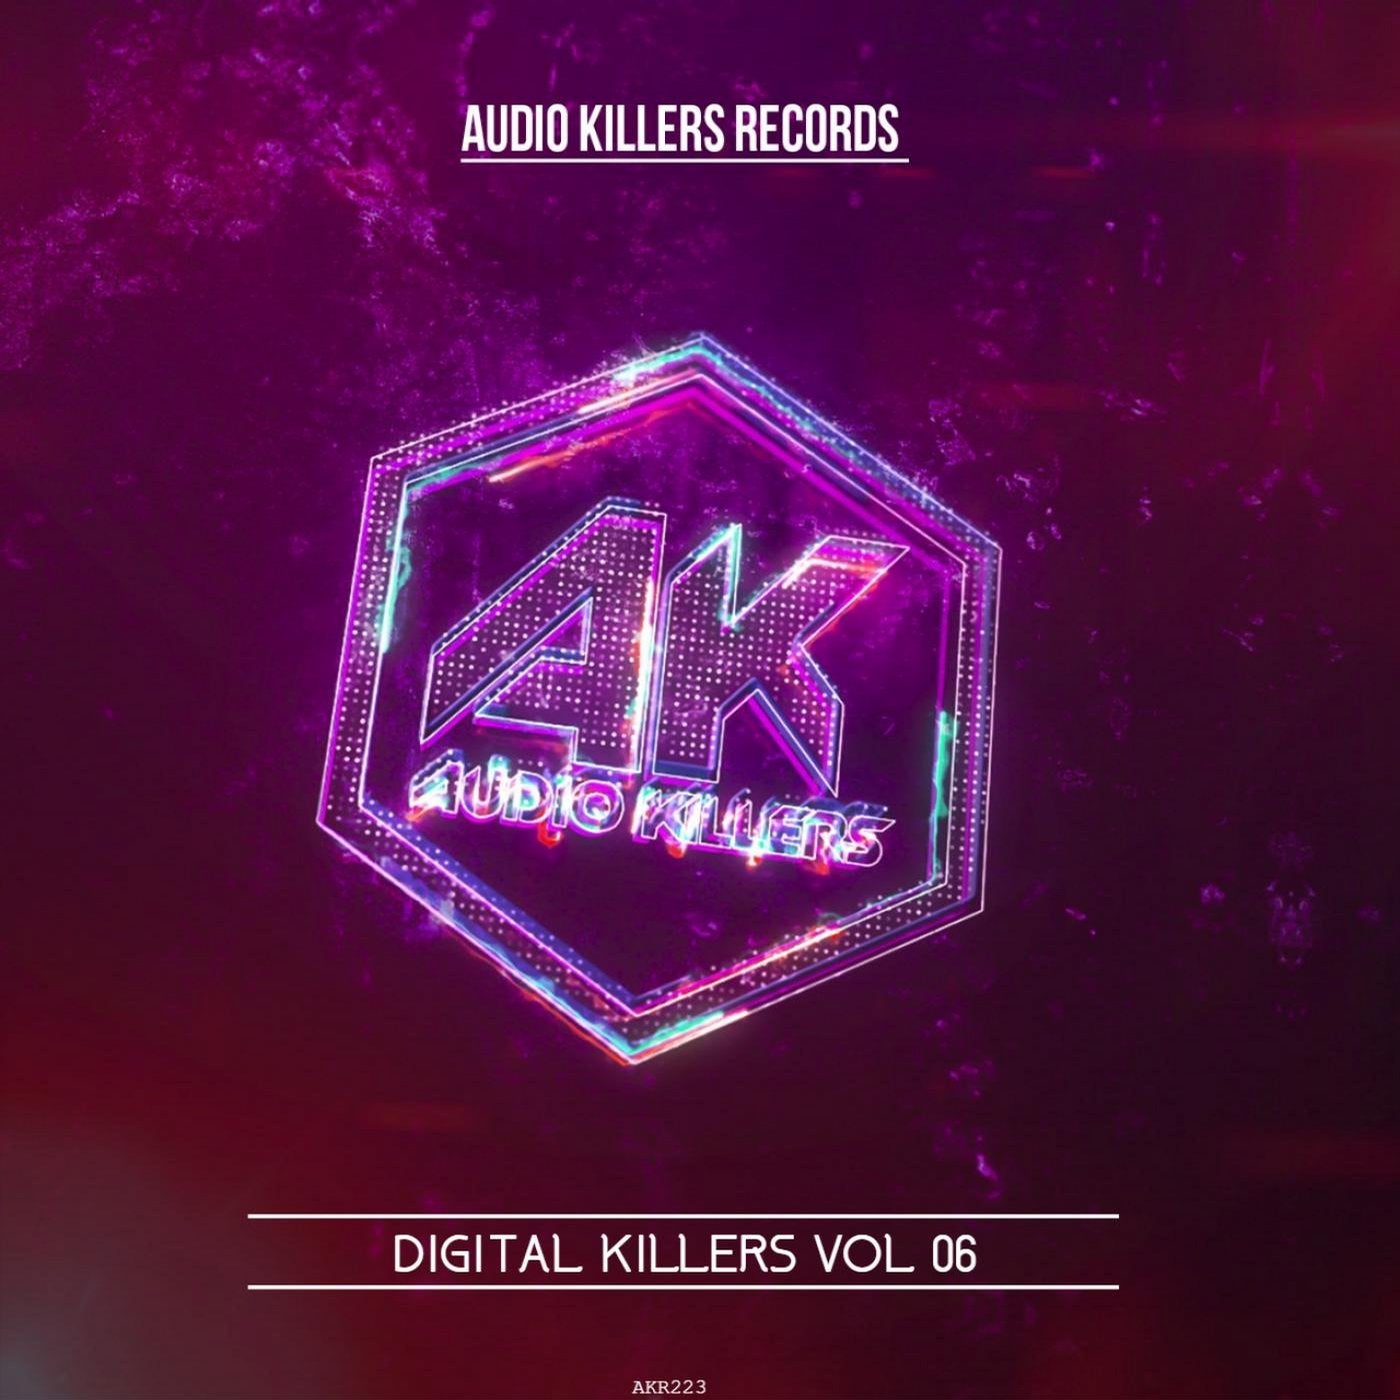 Digital Killers Vol 06